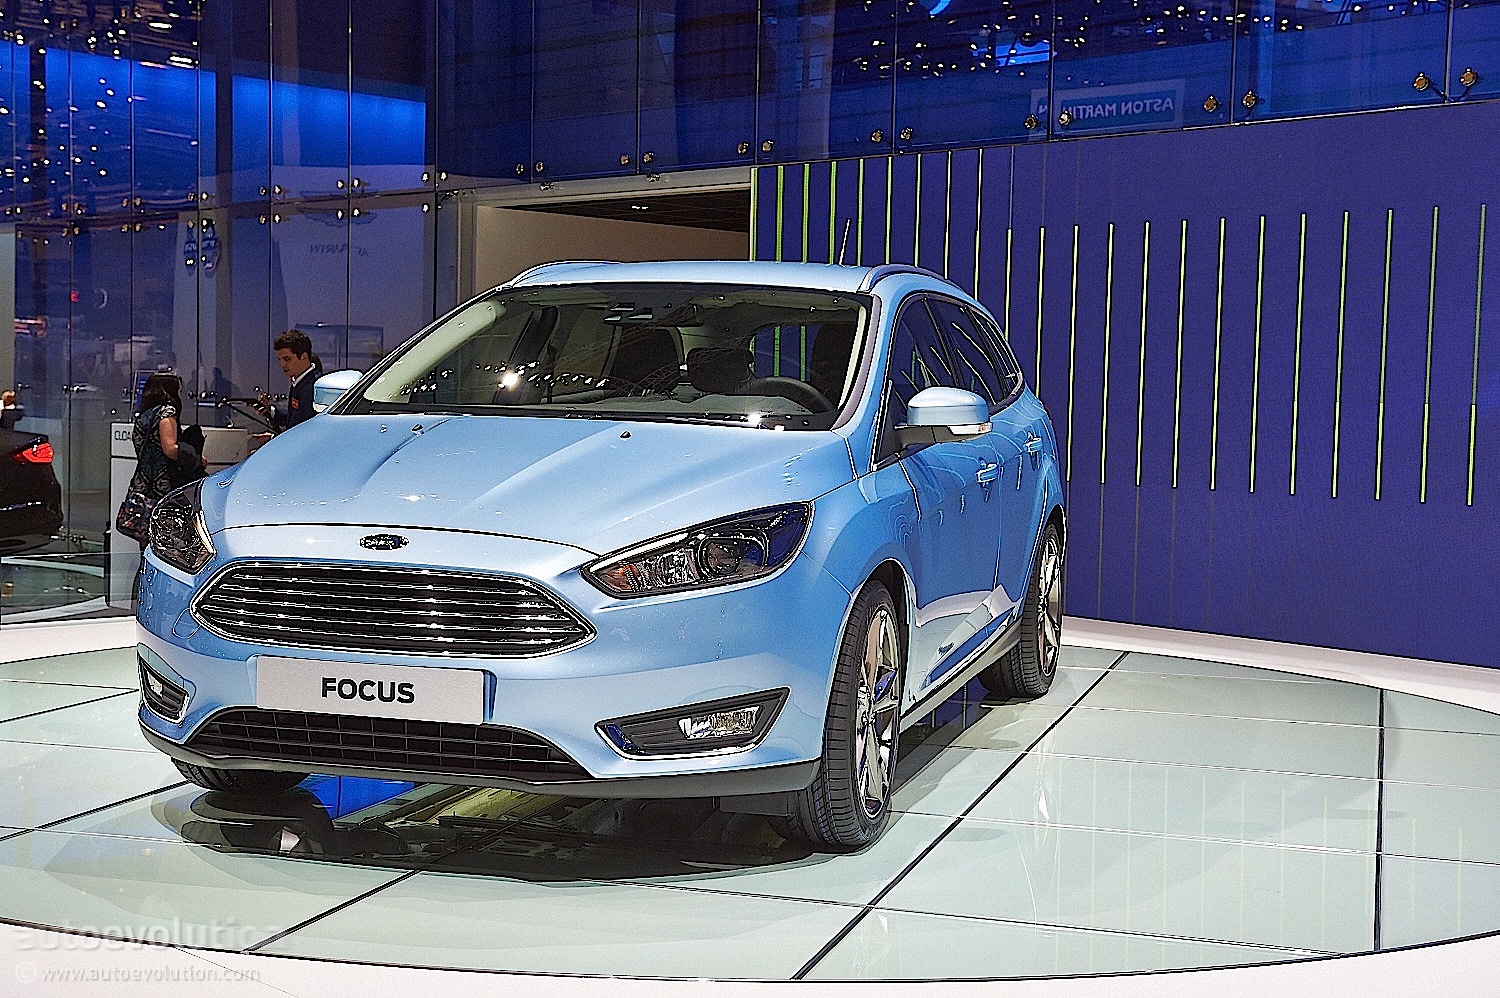 2014 Ford Focus Hatchback, Estate Bow in Geneva [Live Photos][Update ...